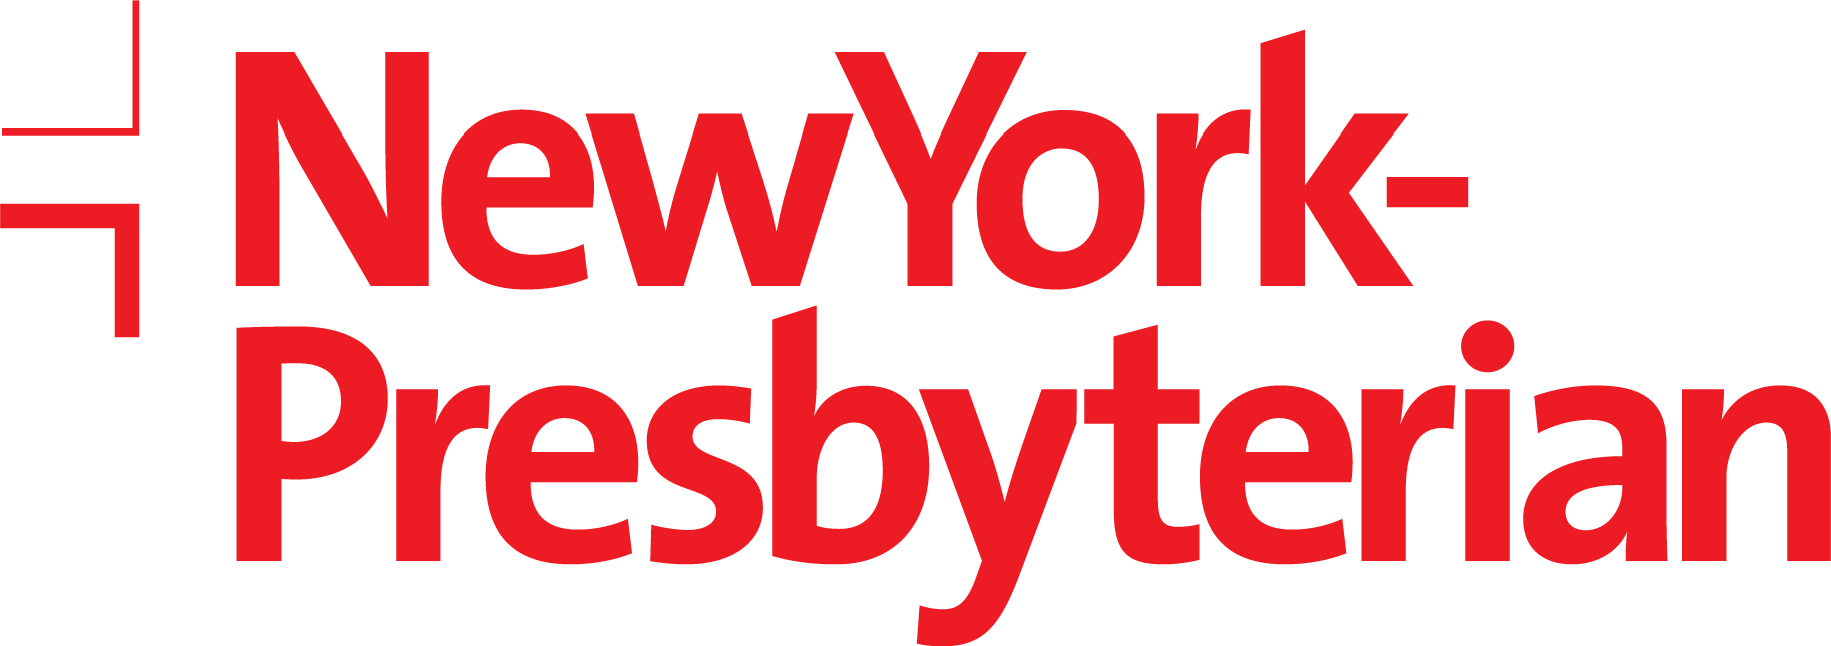 New York Presbyterian - Partners